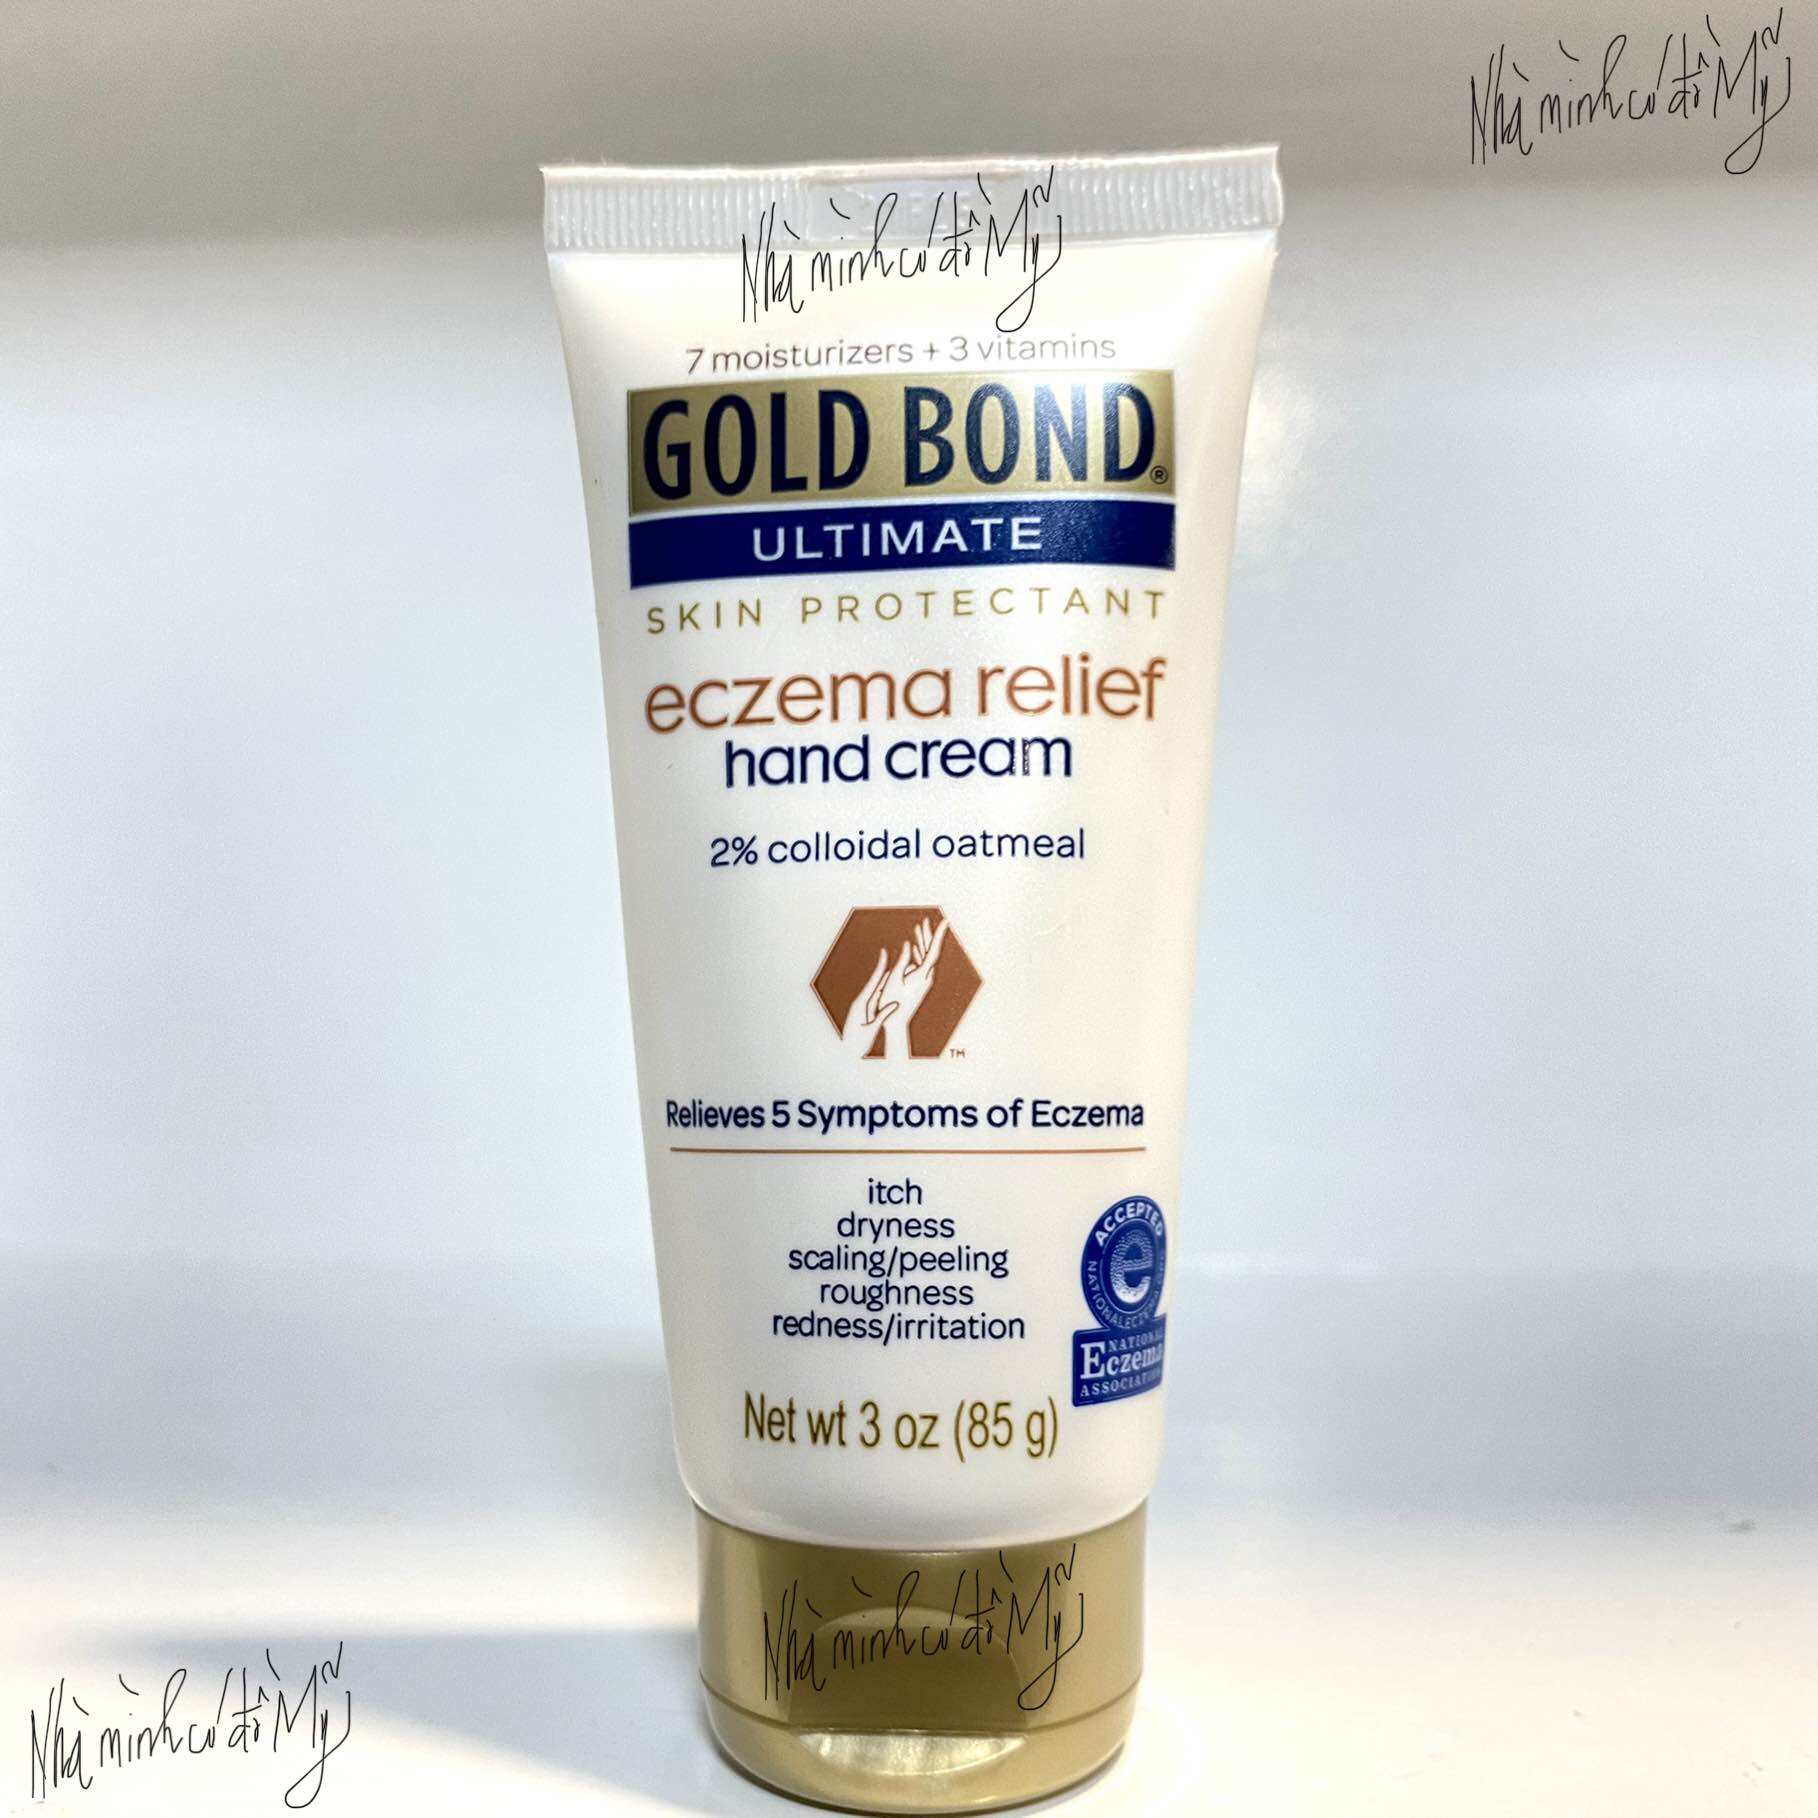 VOUCHER 15% - Kem tay Gold Bond Hand Cream for Eczema Relief 3 oz. Skin